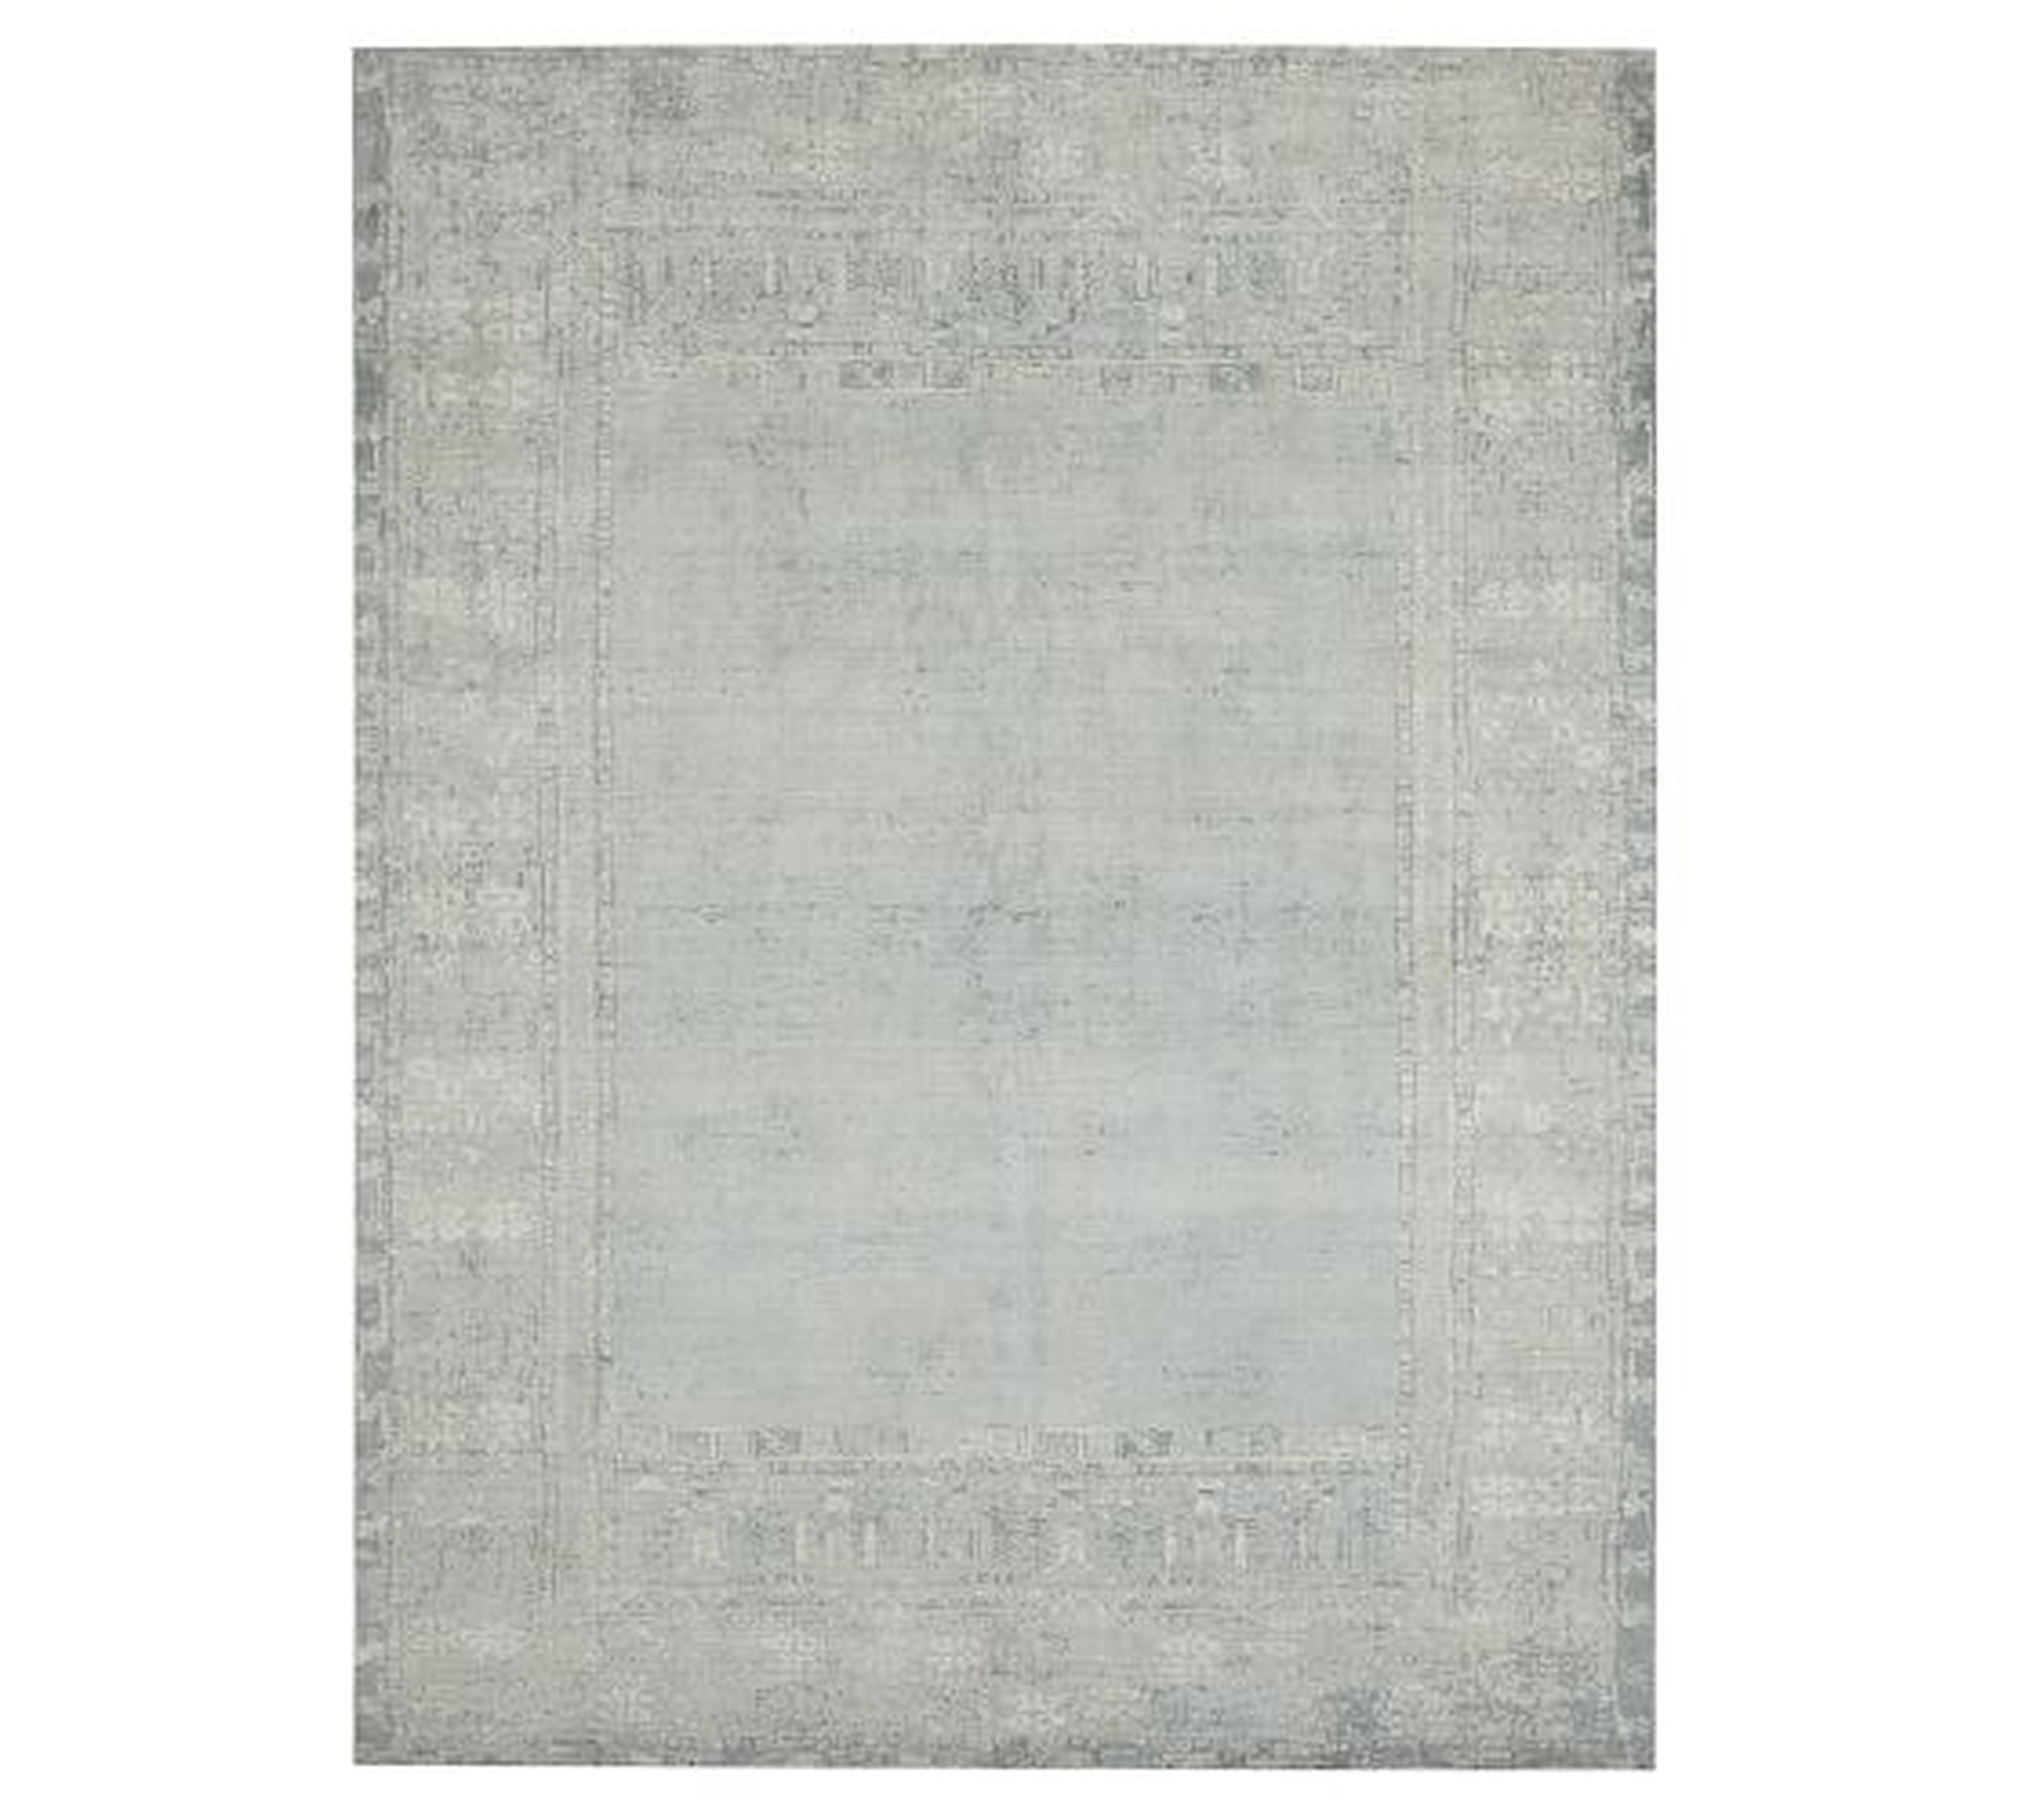 Kailee Printed Wool Rug, 9x12', Porcelain Blue - Pottery Barn